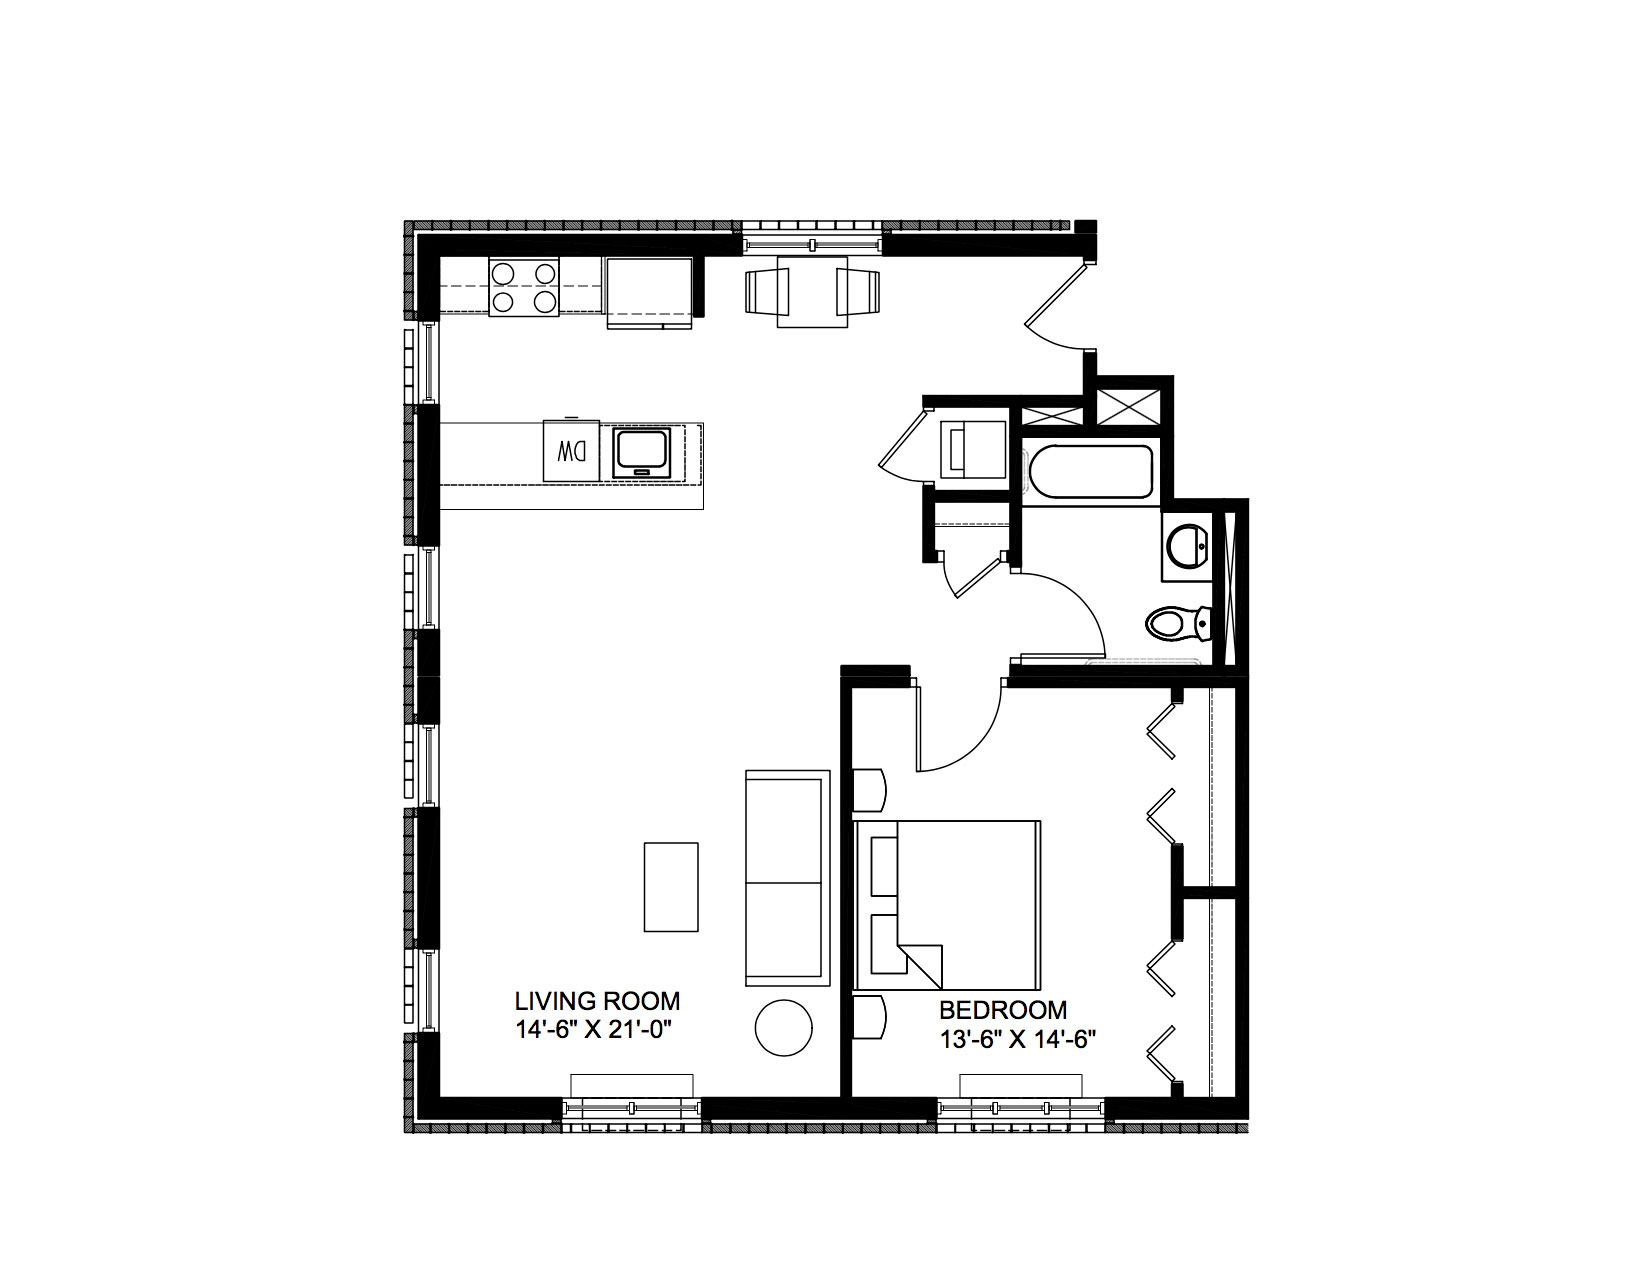 One bedroom floorplan 1